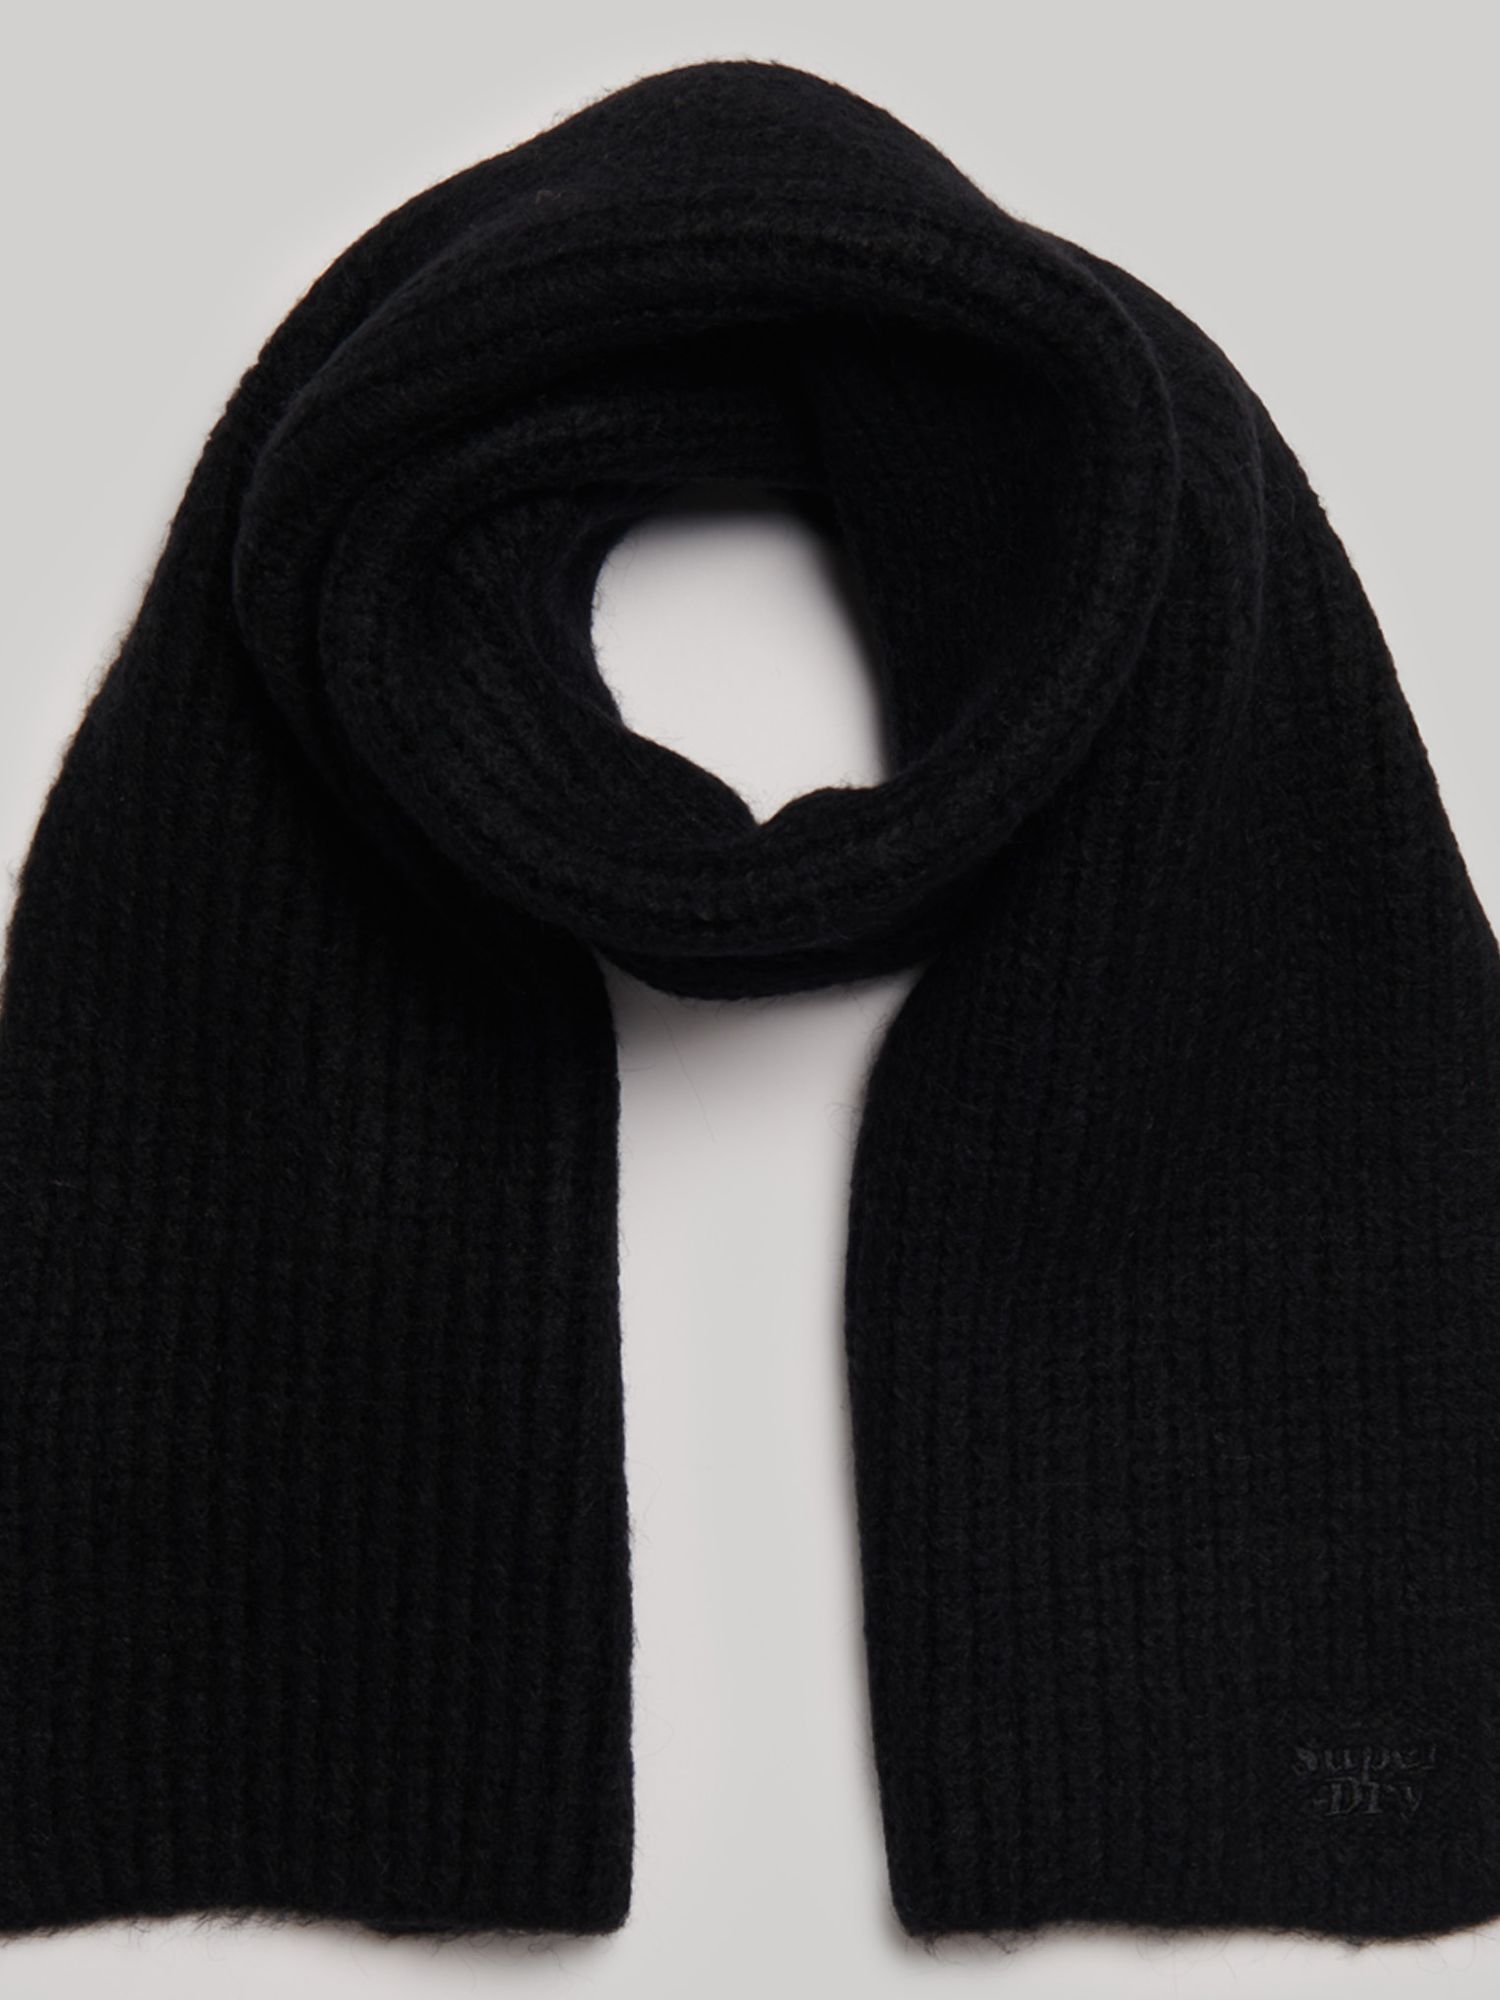 Superdry Ribbed Knit Wool Blend Scarf, Black at John Lewis & Partners